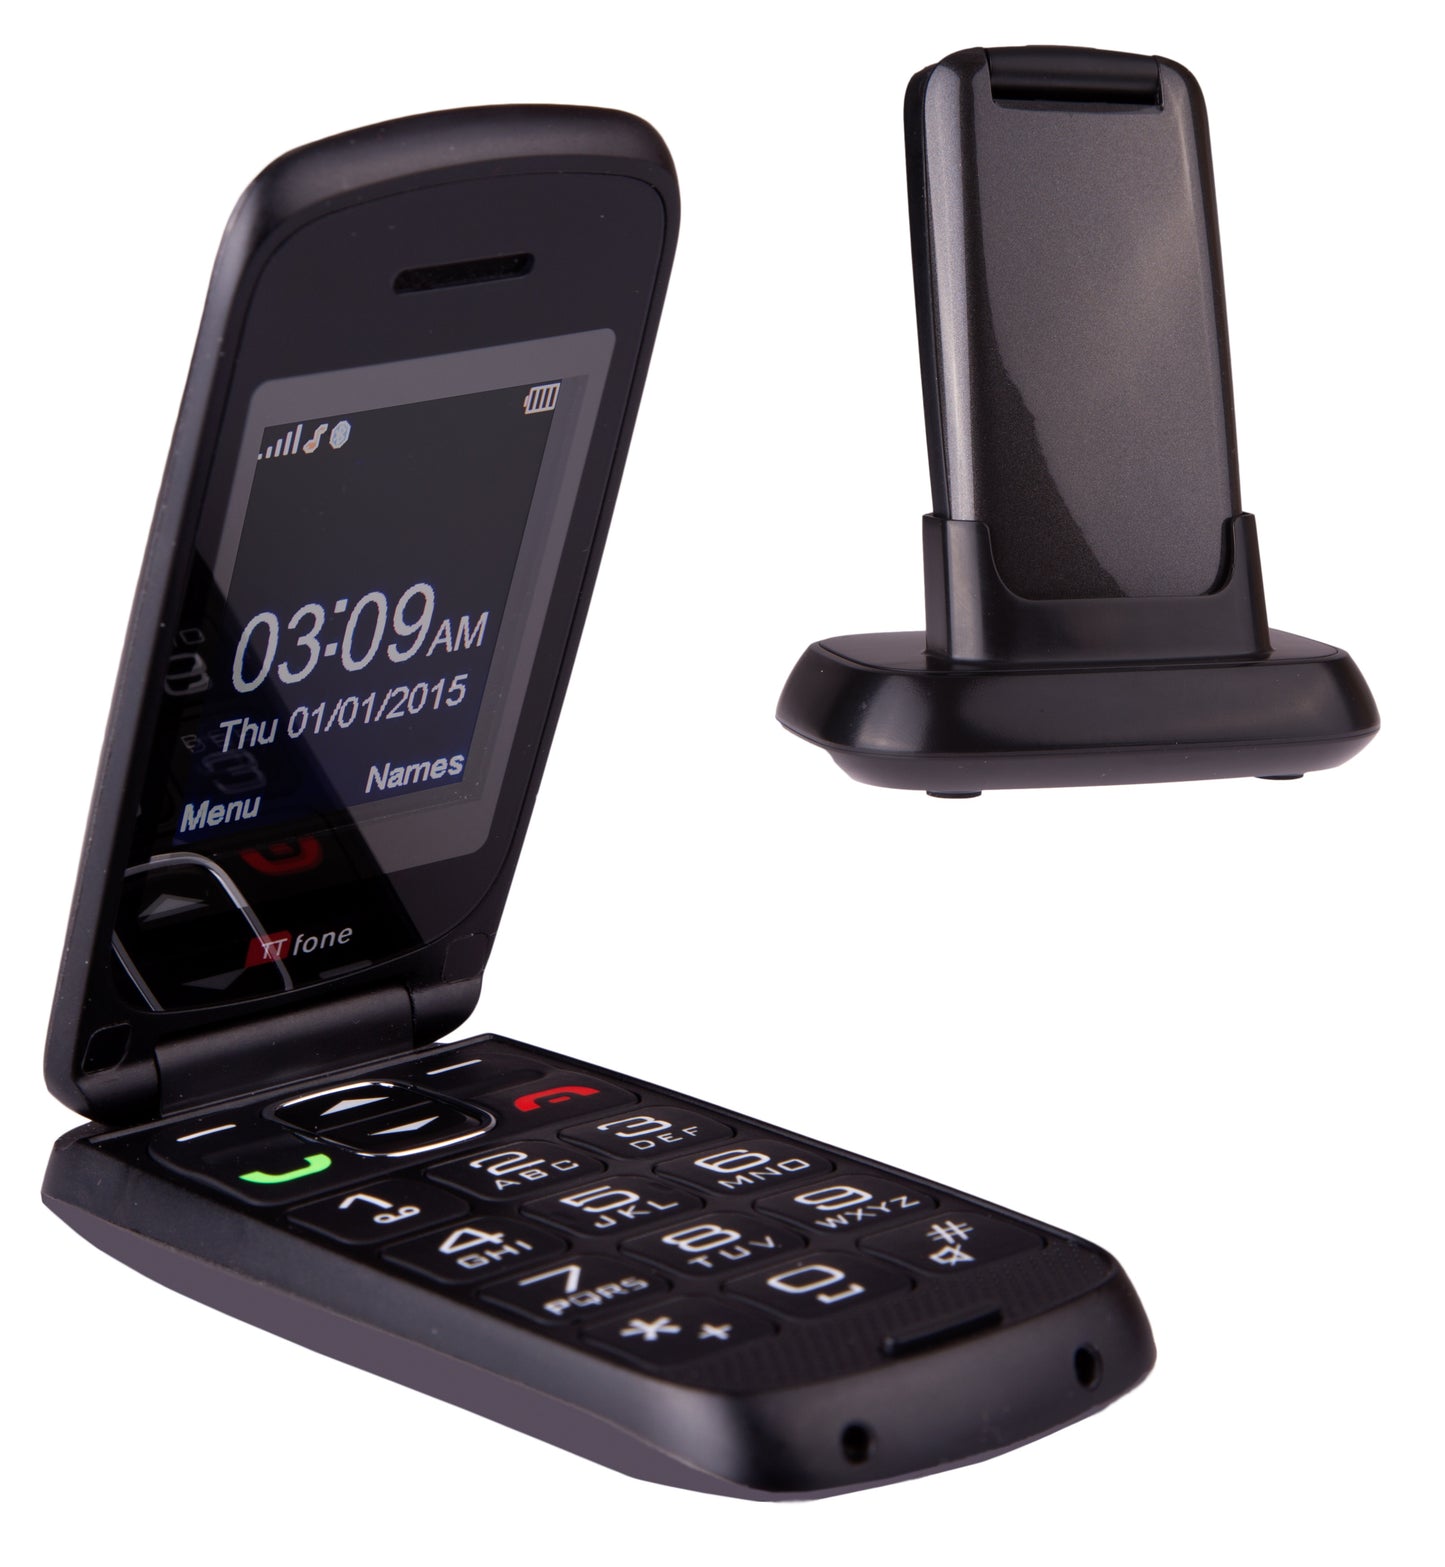 TTfone Star TT300 Grey Flip Big Button Simple Easy to Use Unlocked Mobile Phone